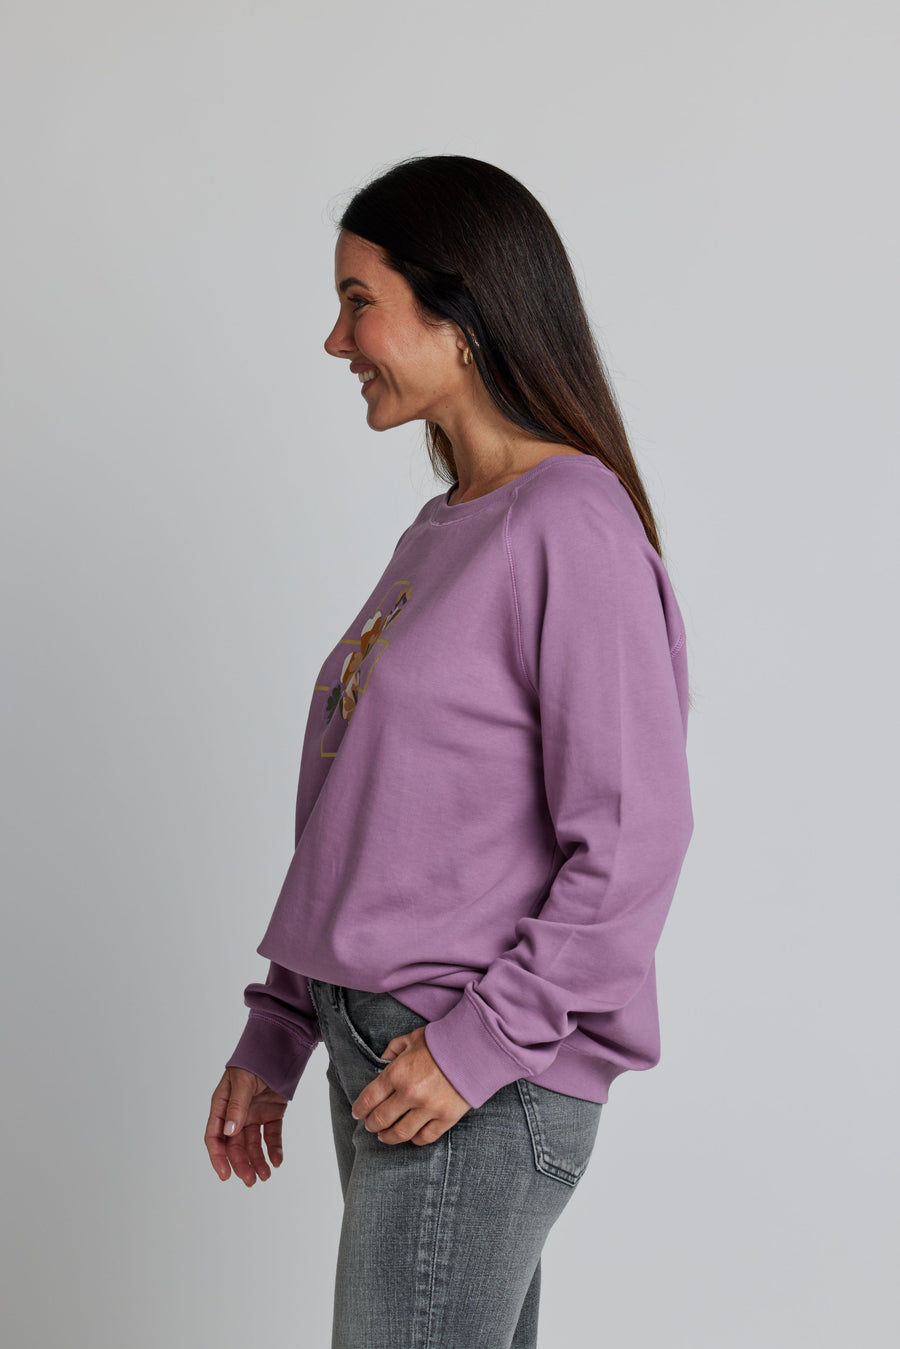 Grape Retro Flowers Sweater